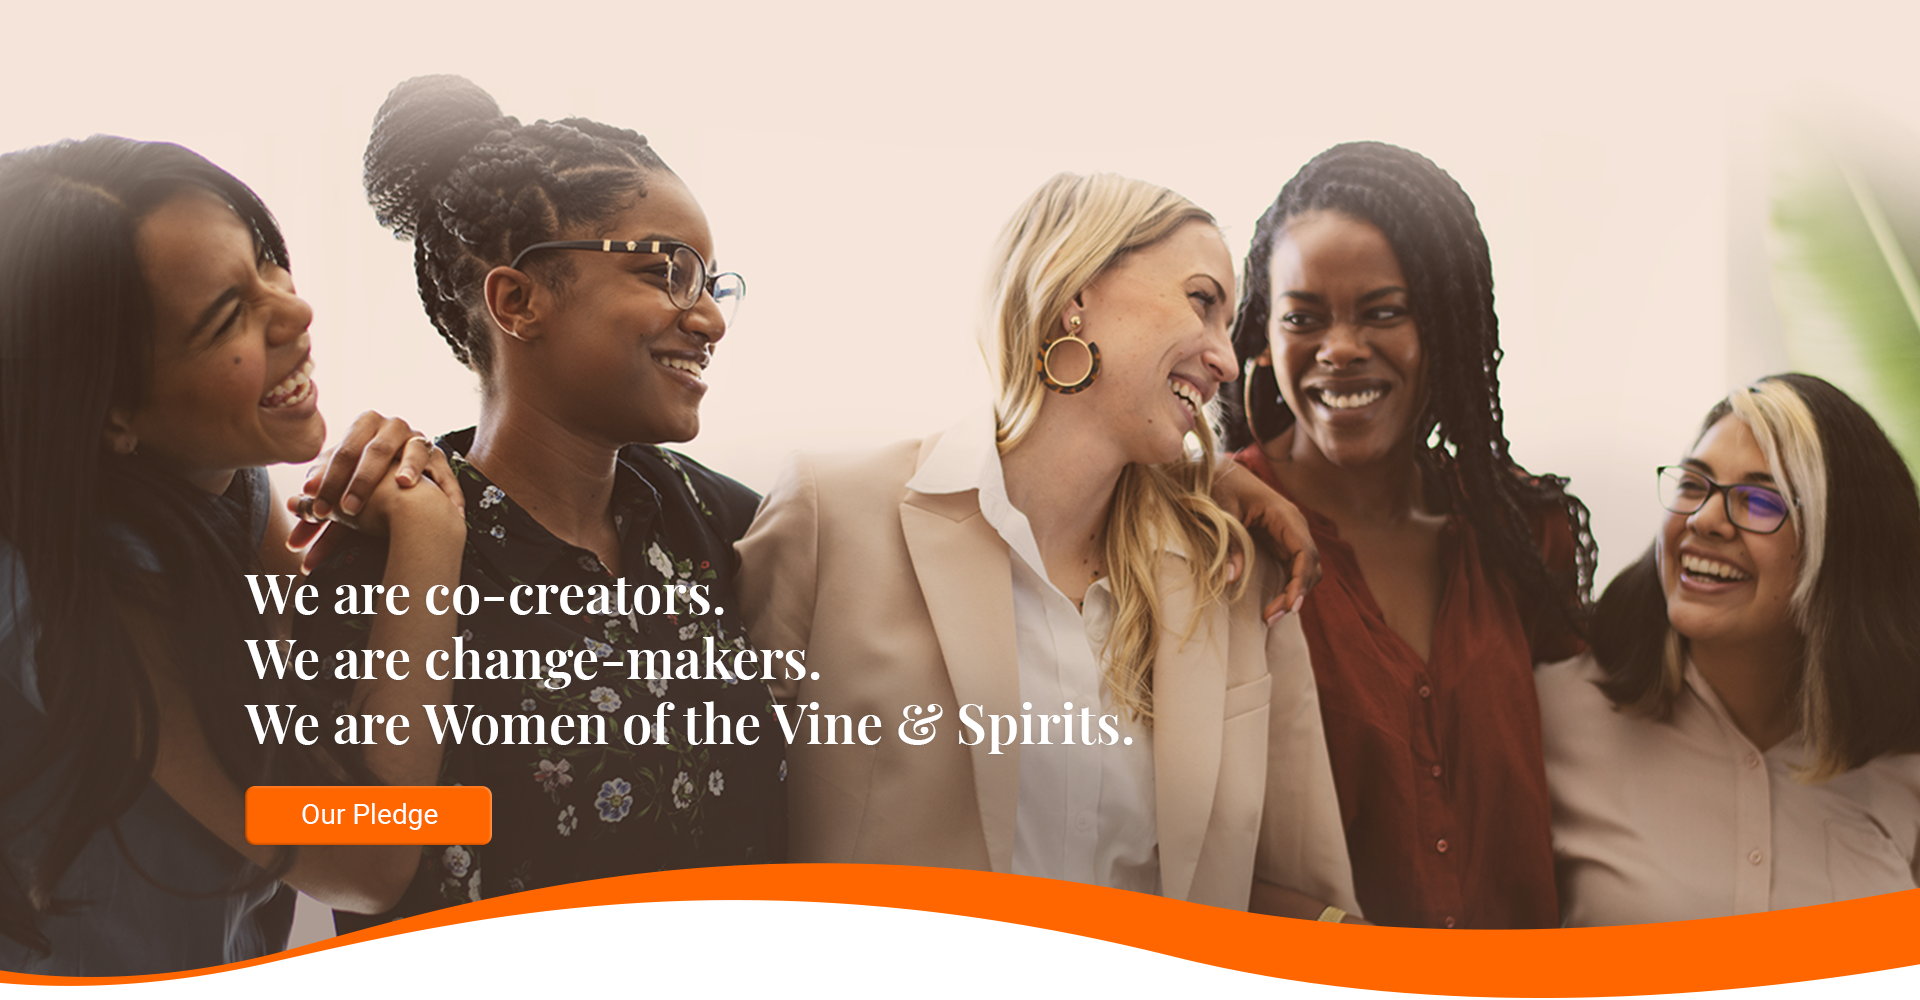 Women of the Vine & Spirits